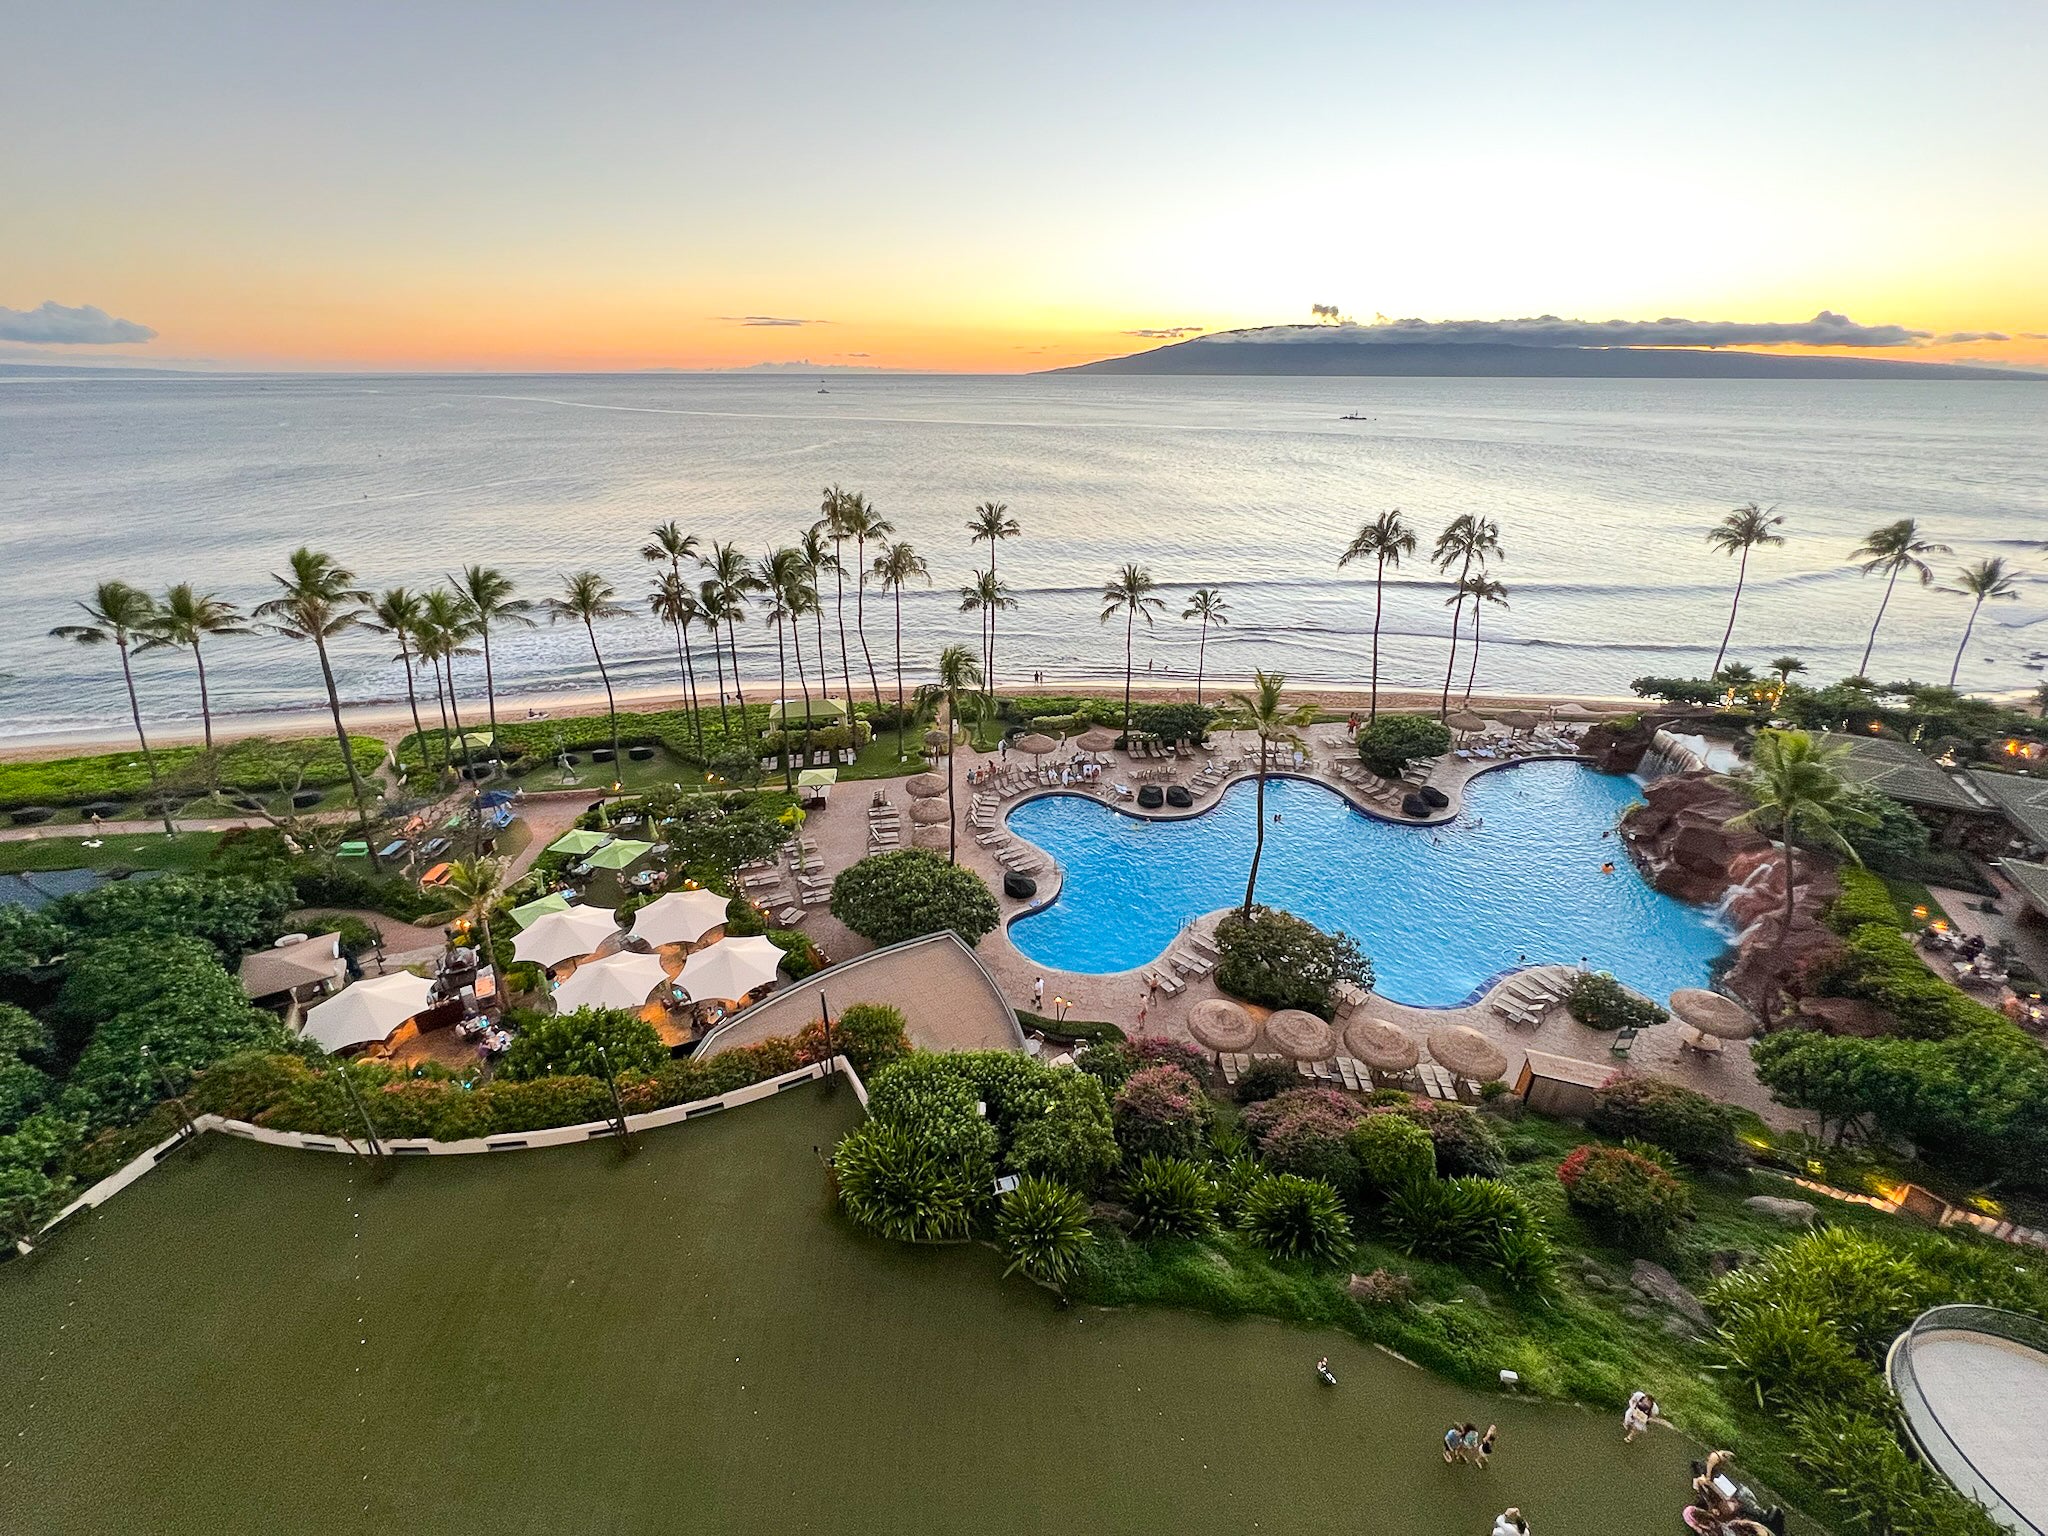 Hyatt Regency Maui Resort and Spa Room Balcony View at Dawn